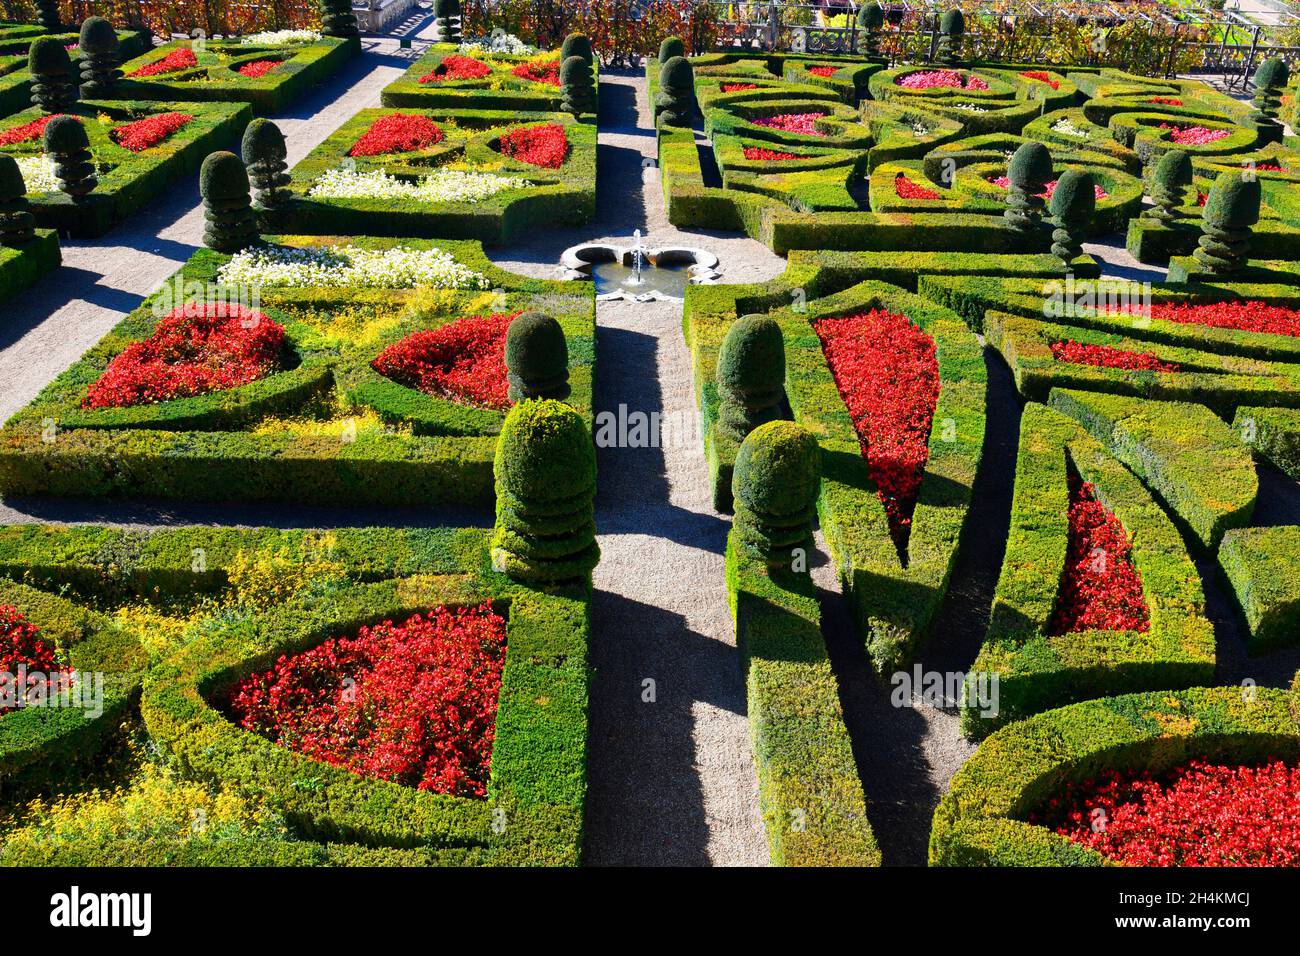 French garden, Chateau de Villandry, UNESCO World Heritage Site, Indre et Loire in the Loire Valley, France, Europe. Stock Photo